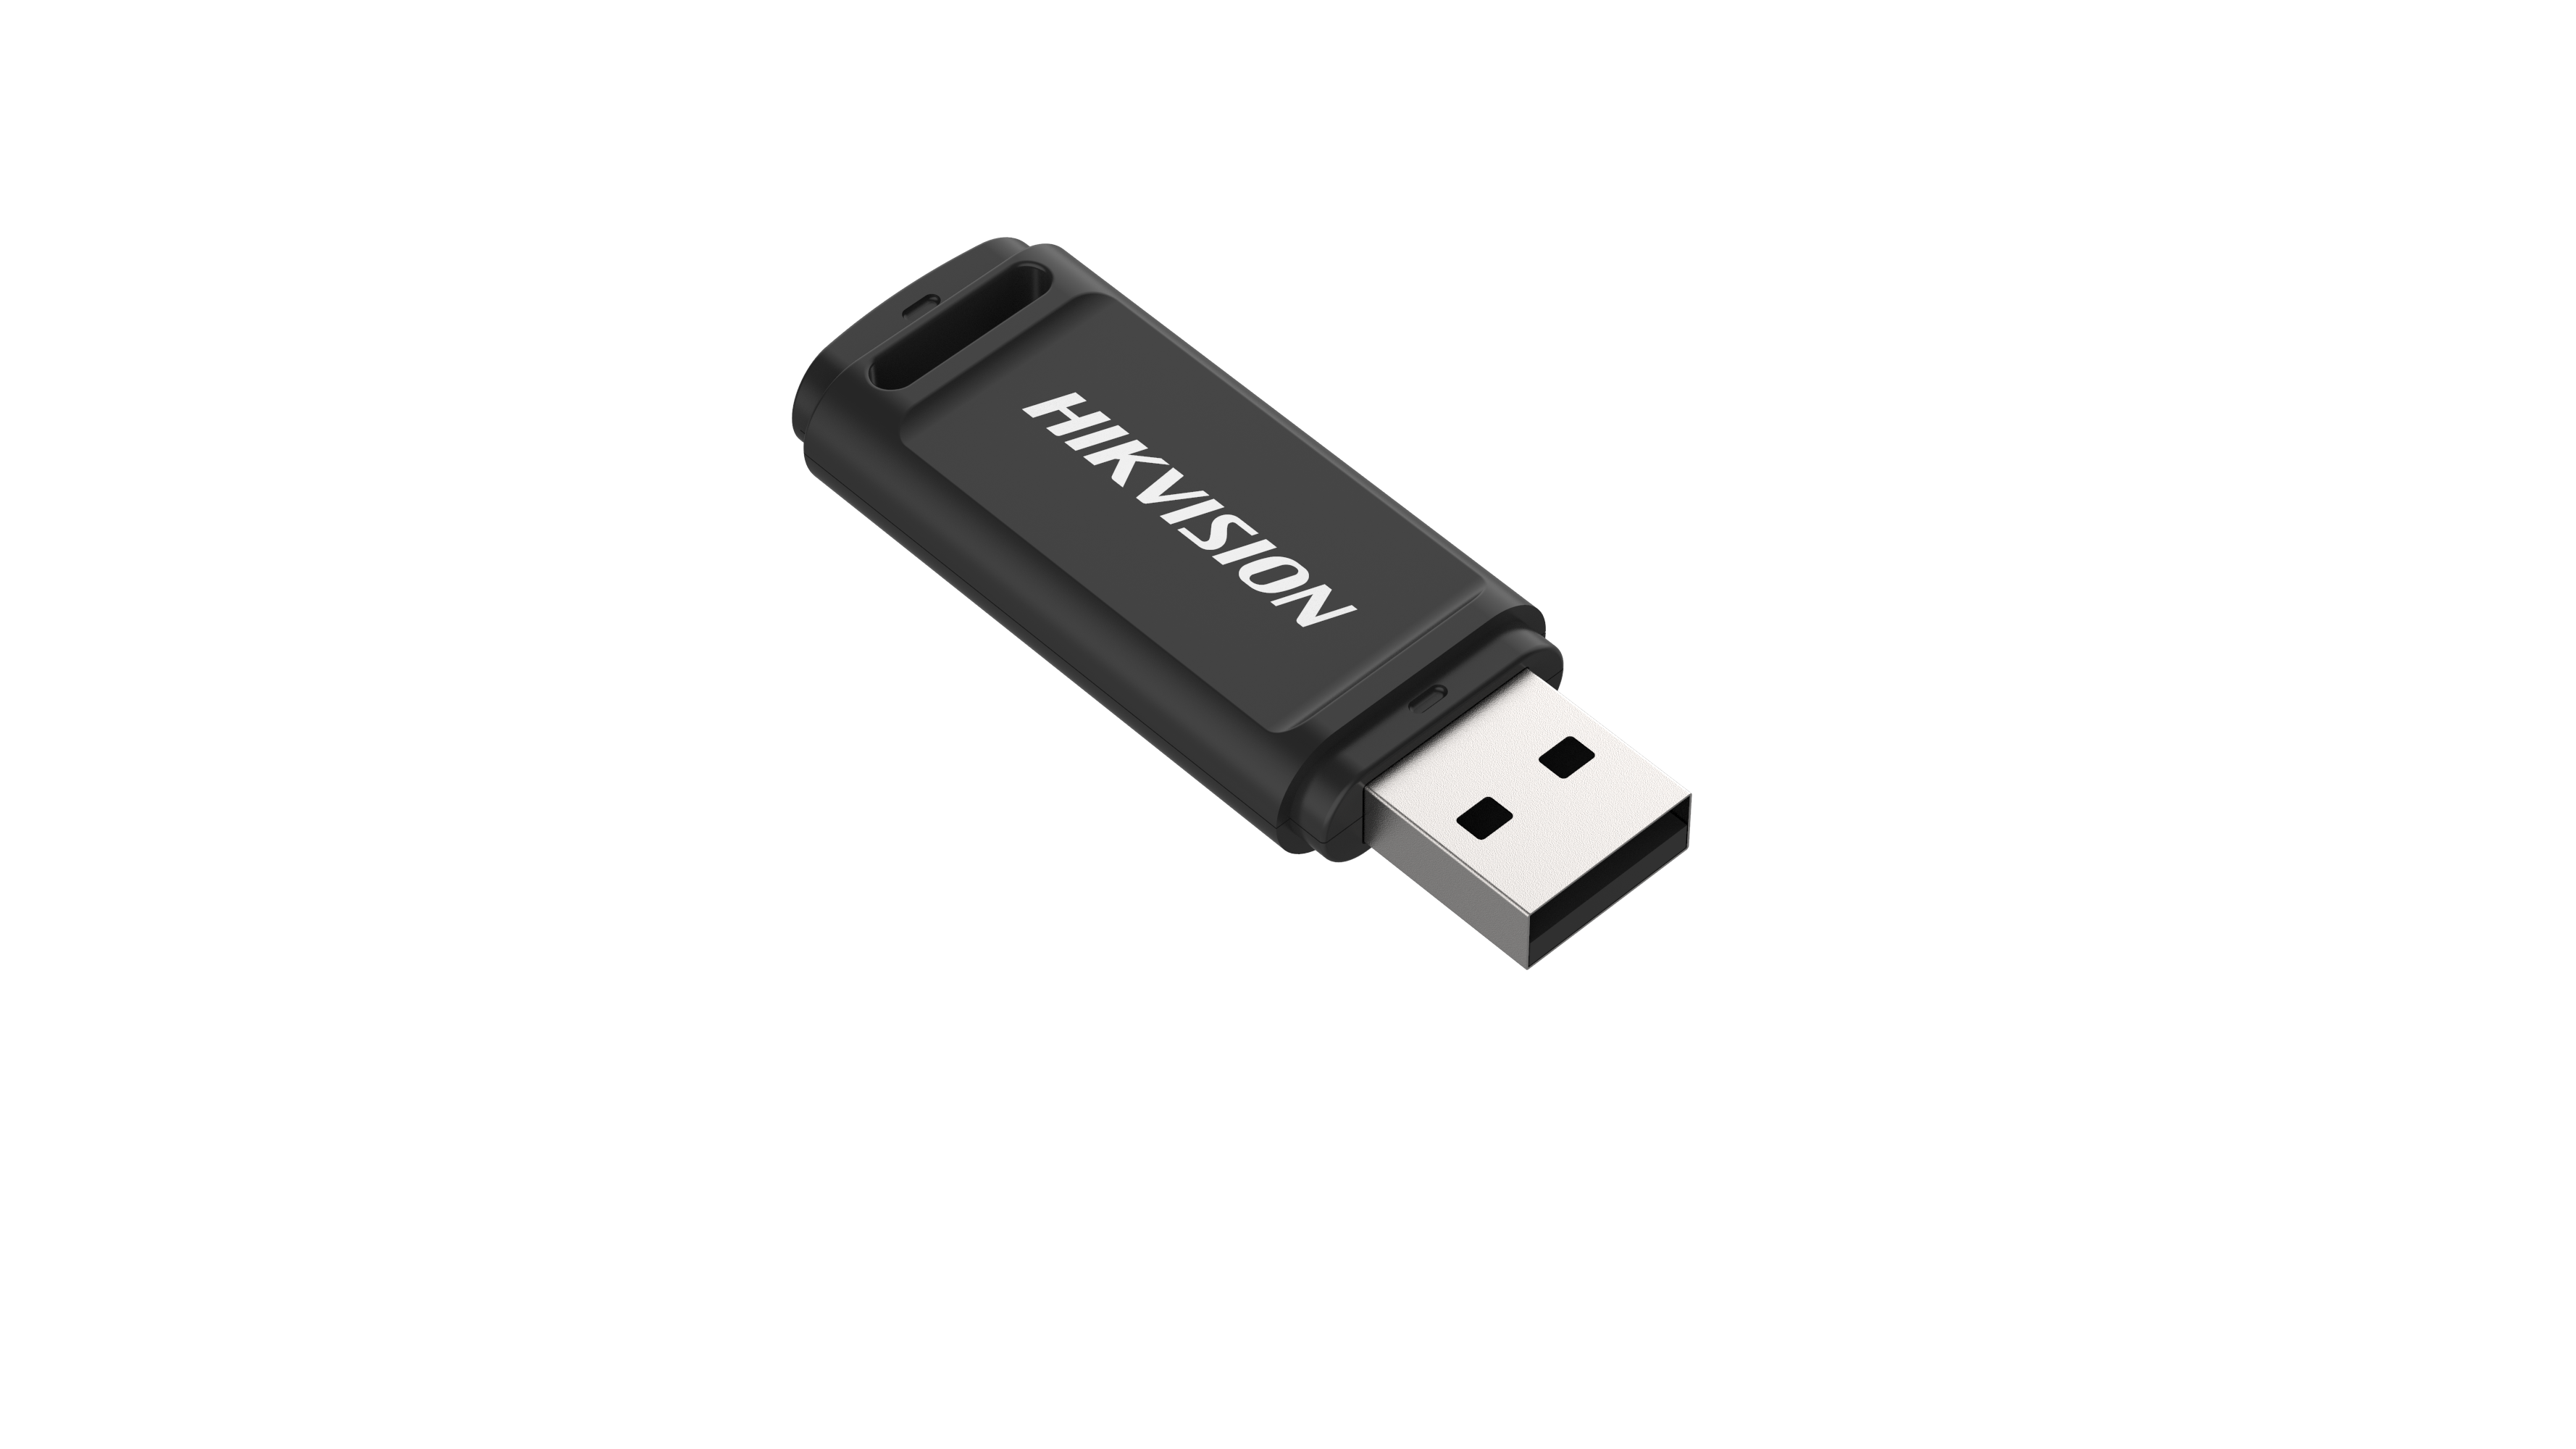 HikVision HS-USB-M210P(STD) 128GB U3/OD